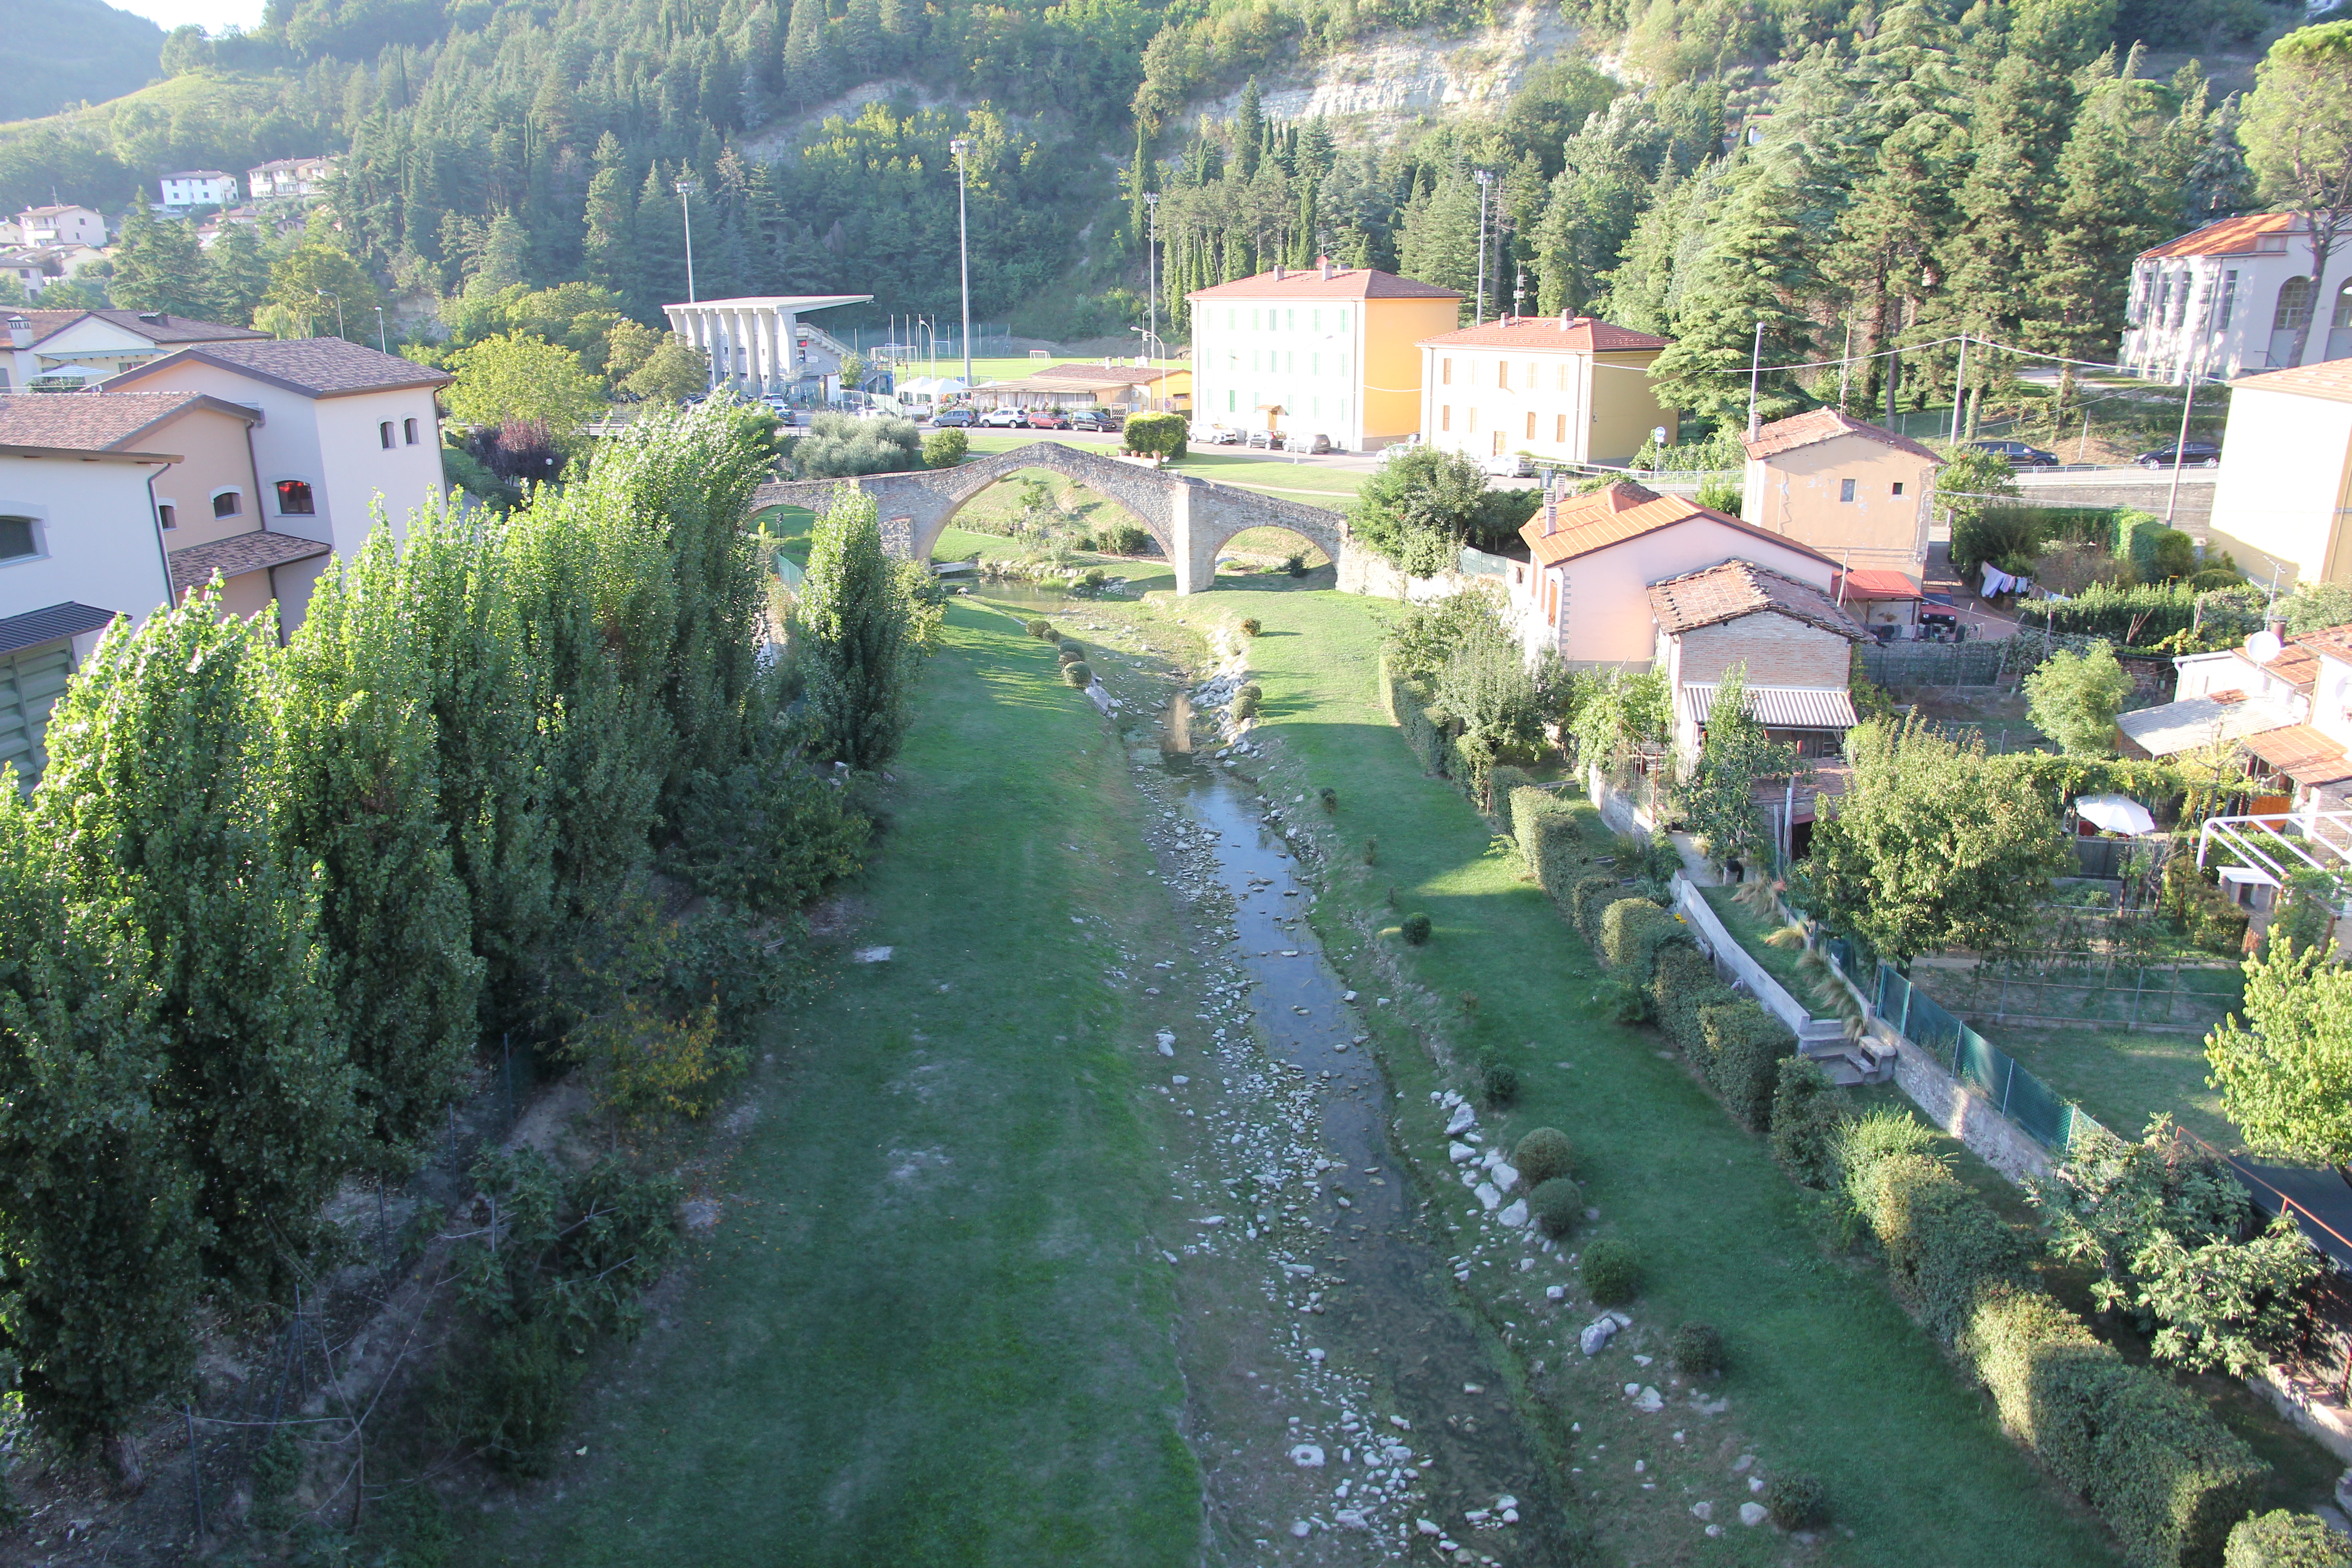 photo: https://upload.wikimedia.org/wikipedia/commons/7/7c/Modigliana%2C_ponte_di_San_Donato_%2801%29.jpg